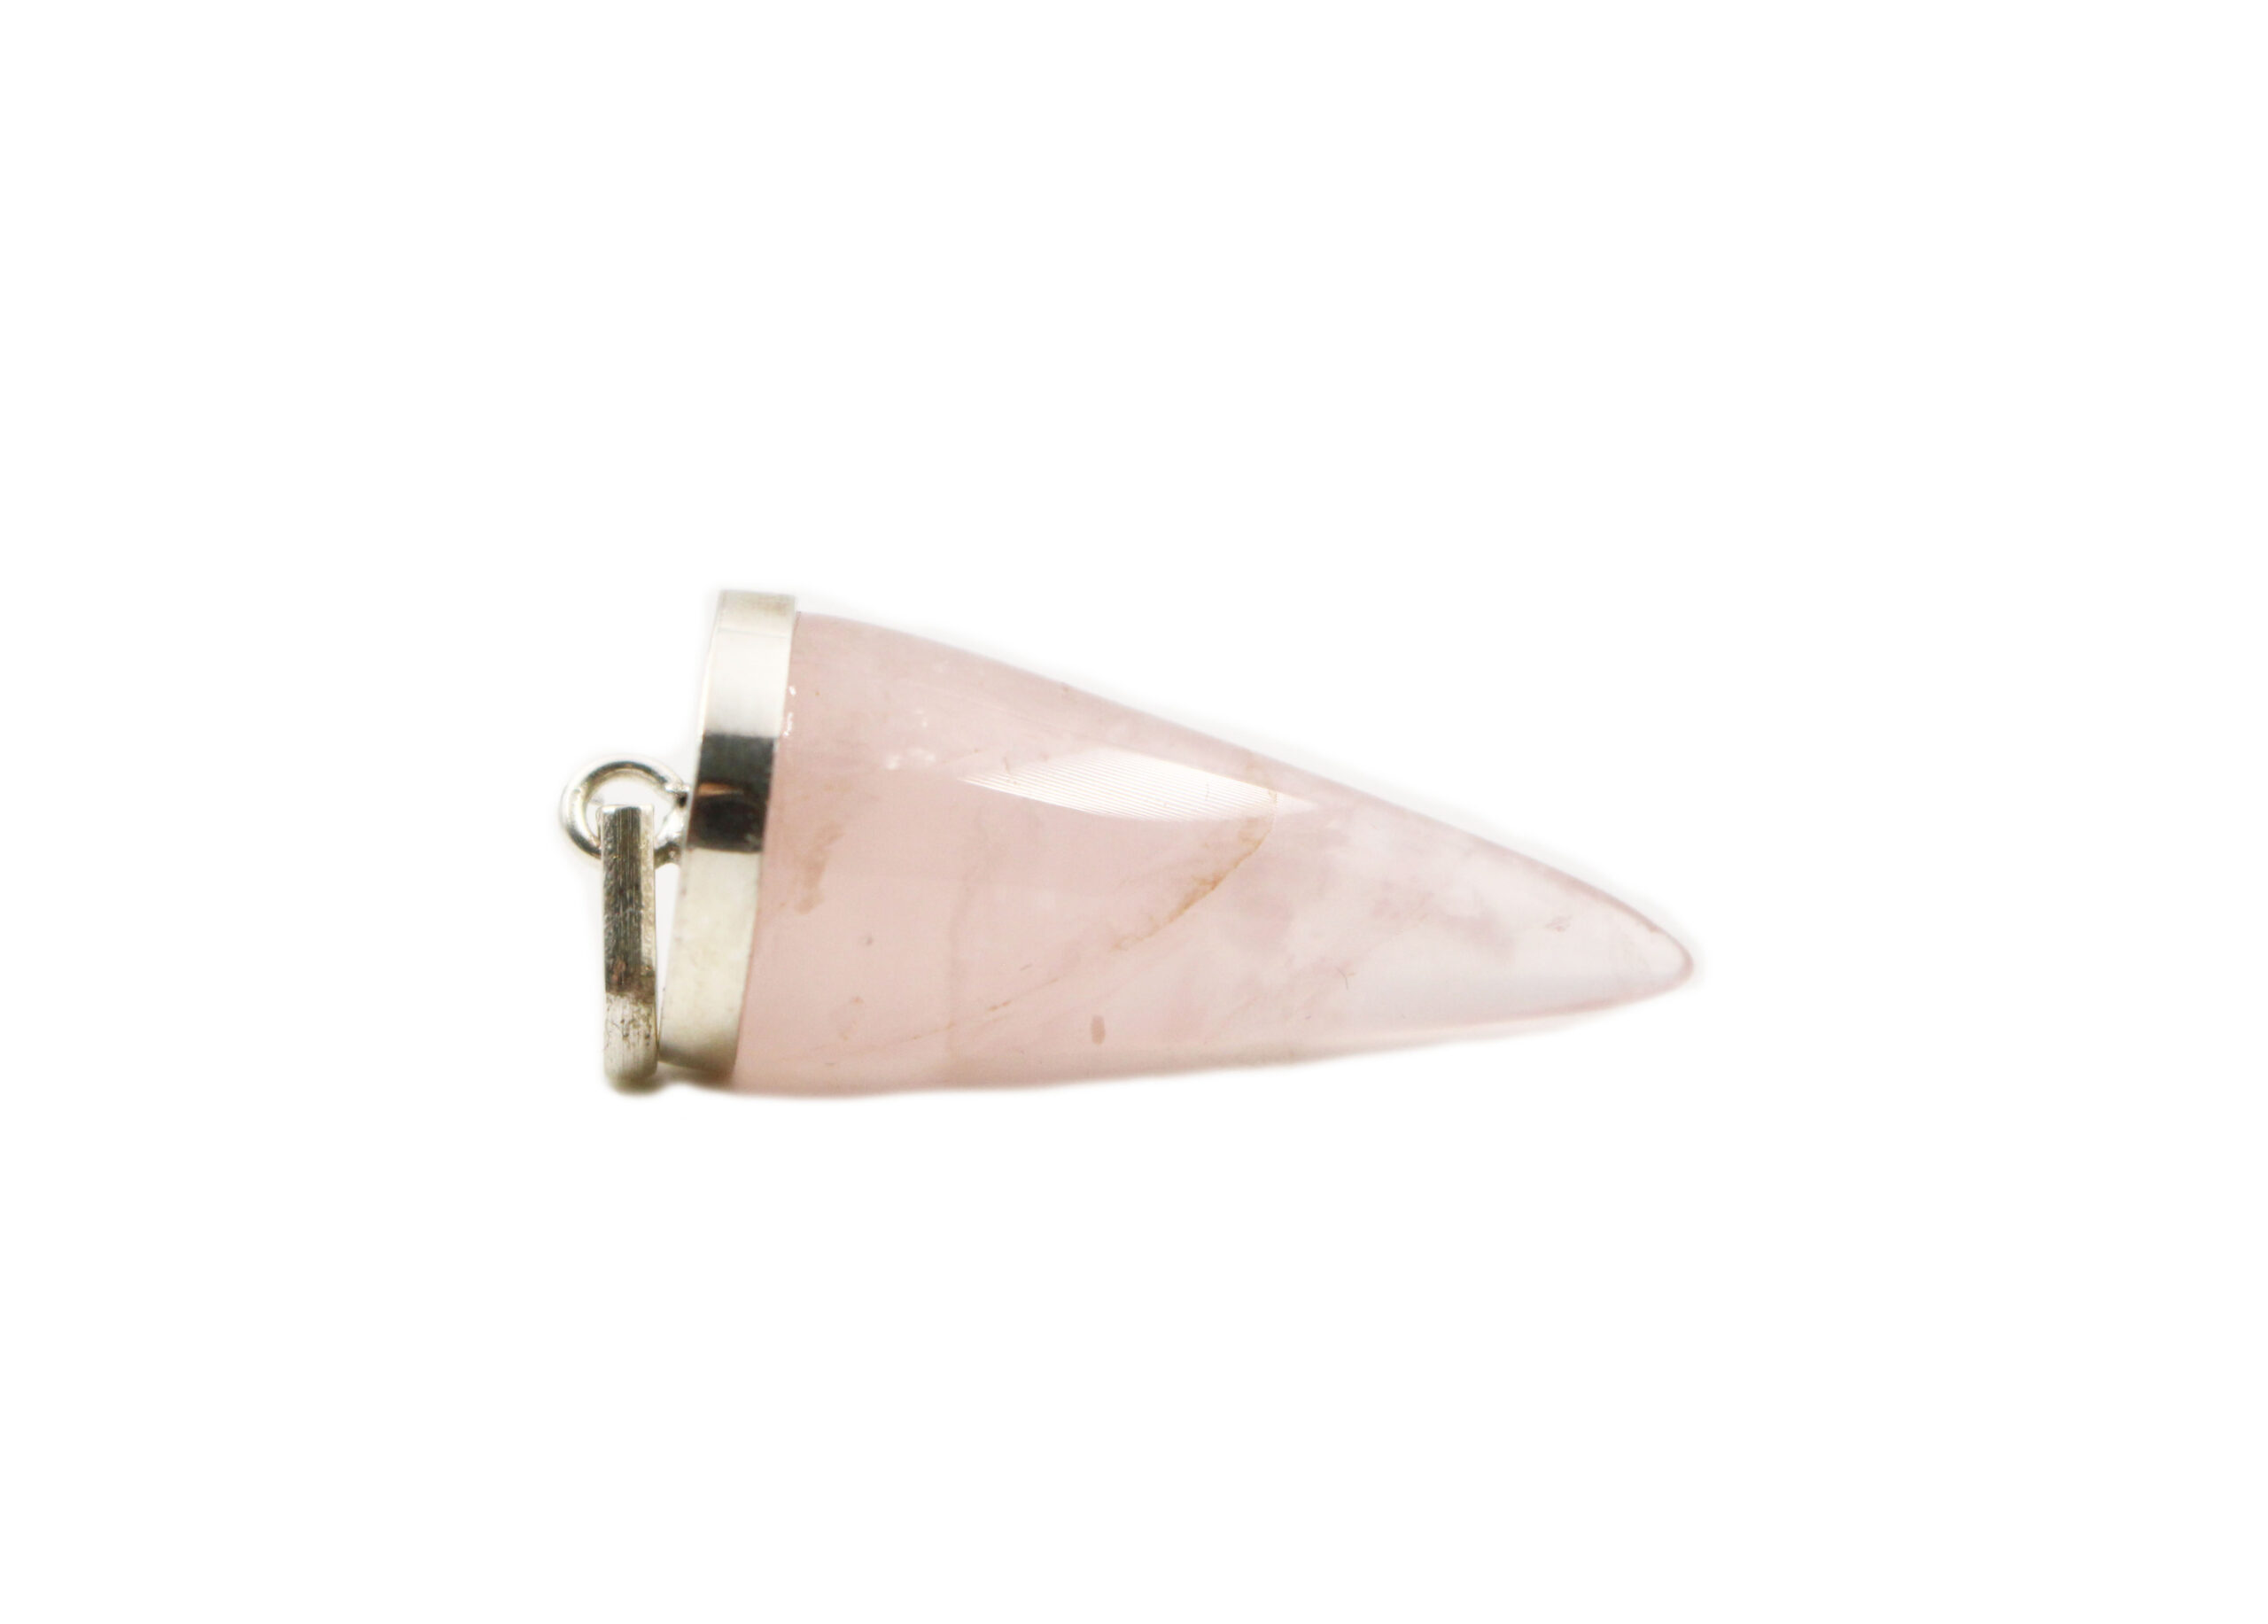 Rose Quartz "Cone" Pendant Sterling Silver - Crystal Dreams